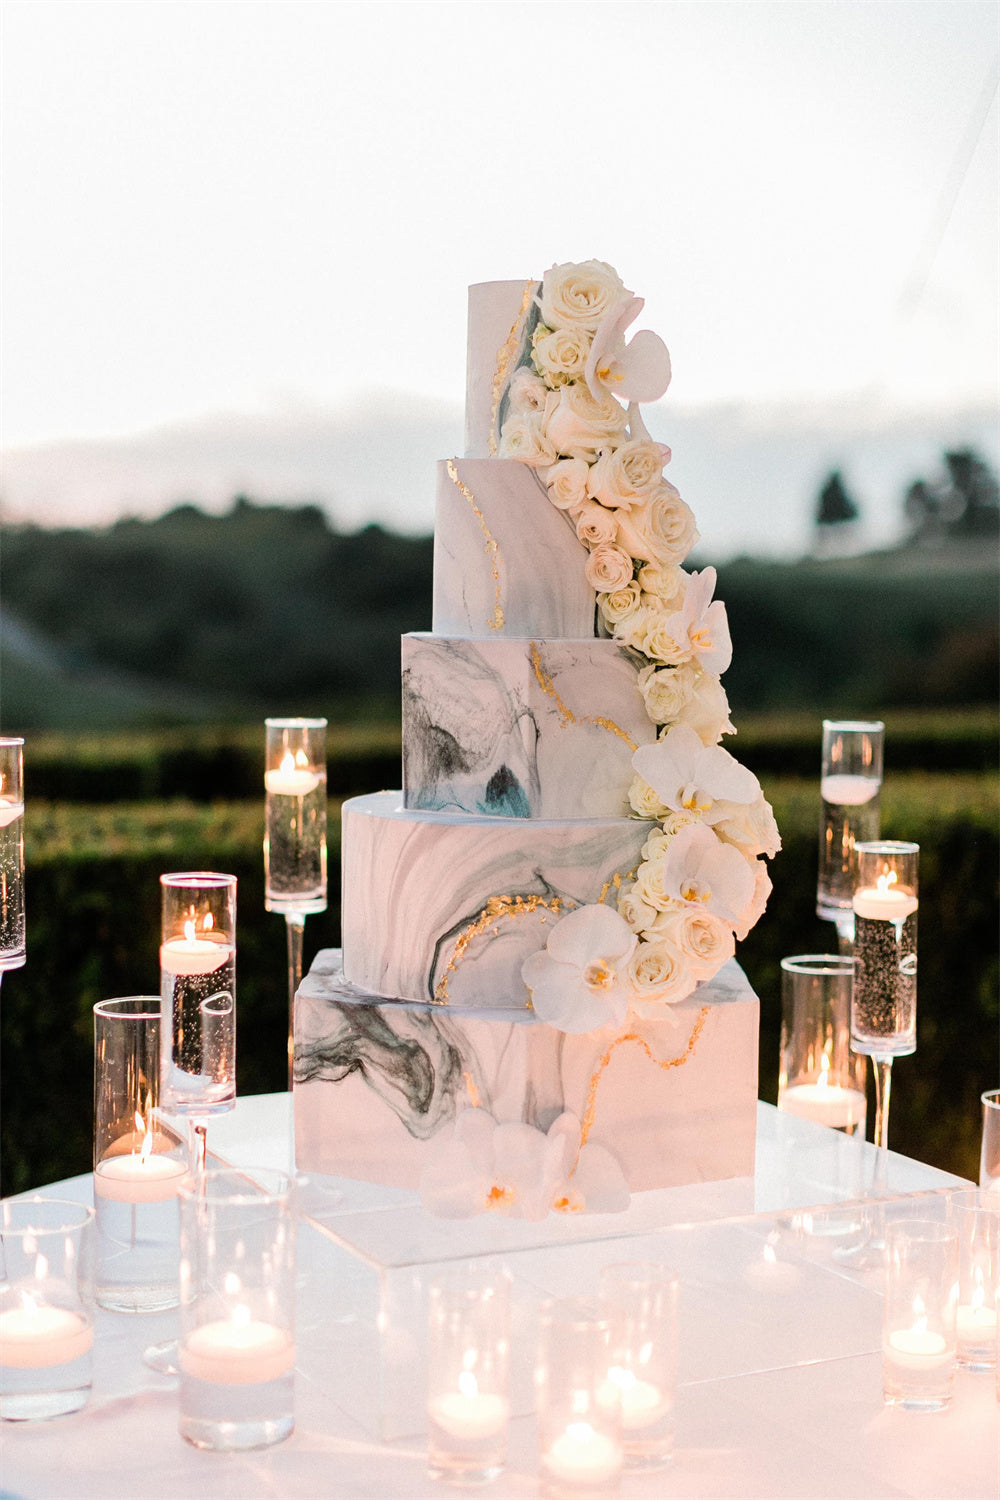 Amazing Marble Wedding Cakes With Flowers